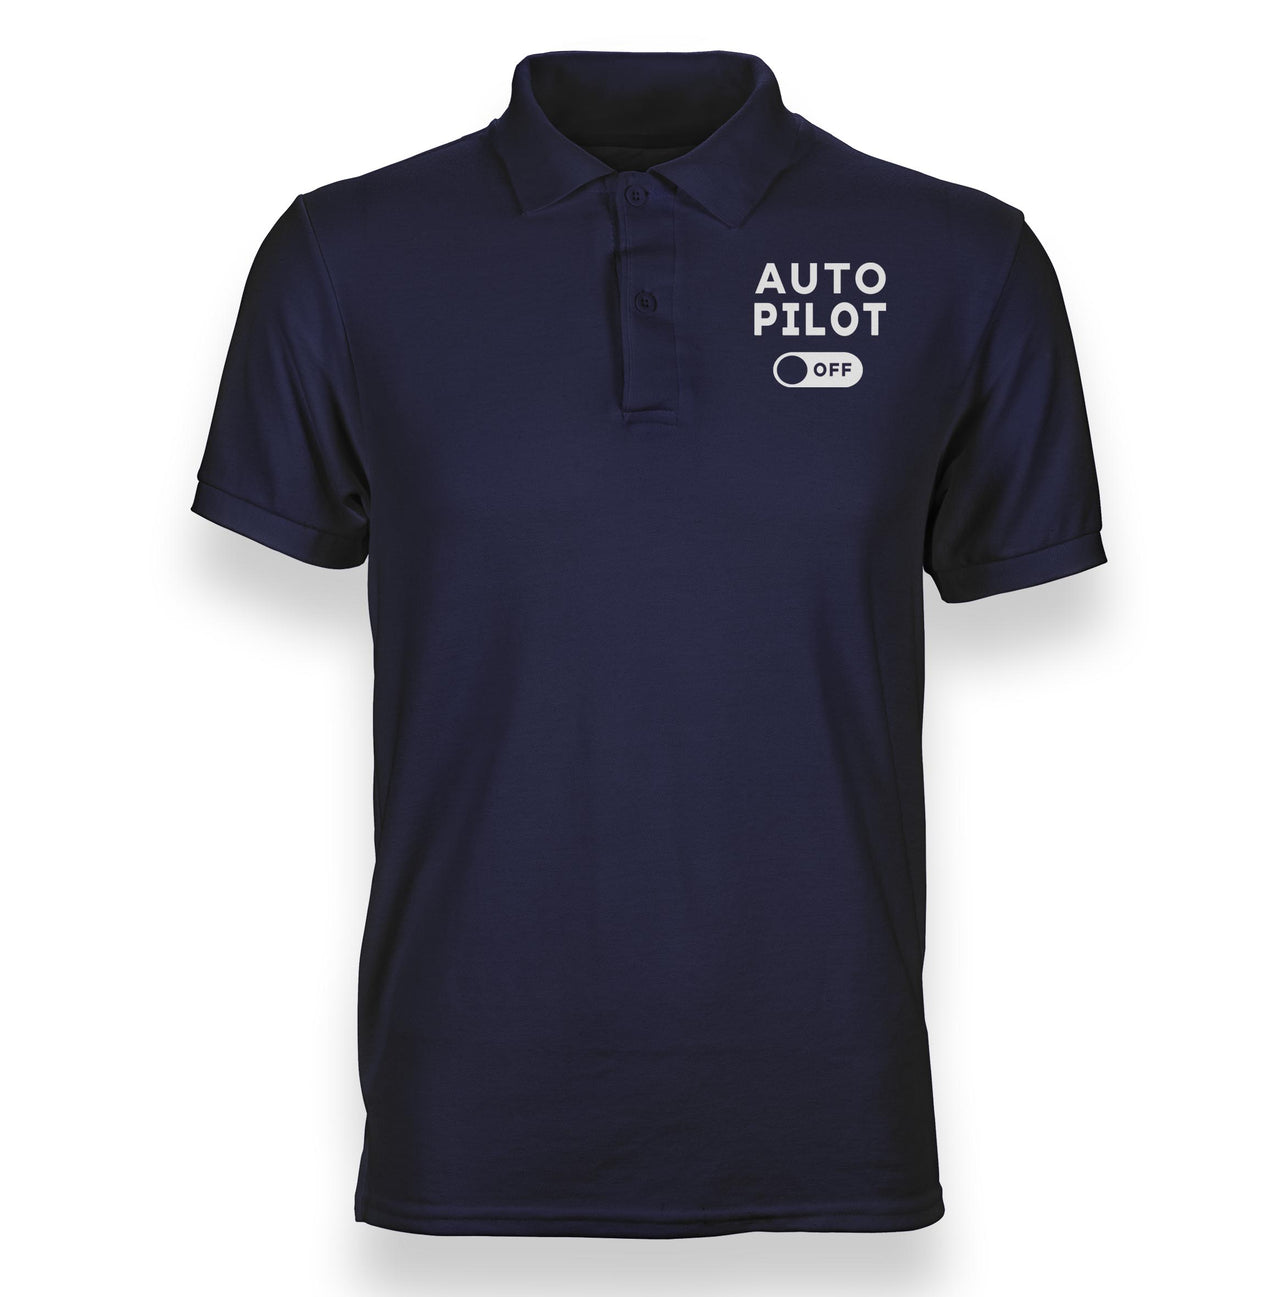 Auto Pilot Off Designed Polo T-Shirts